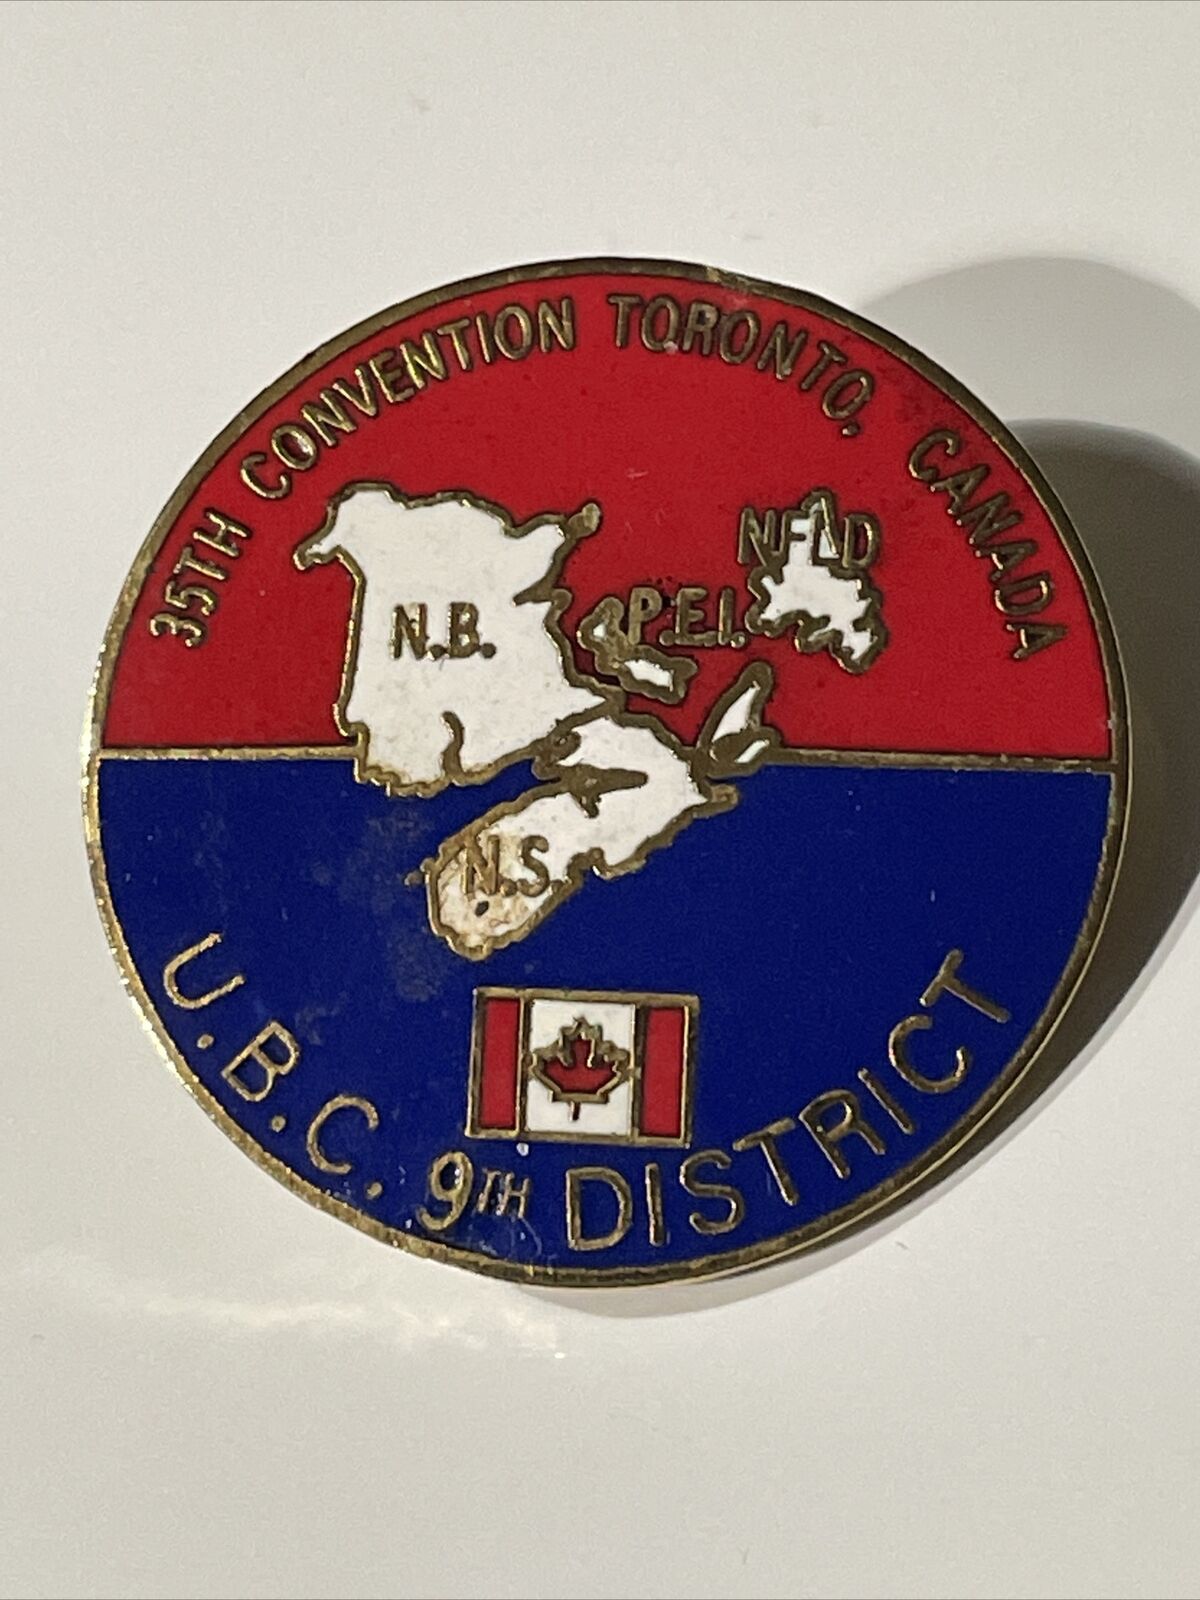 UBC 9th District 35th Convention Toronto Canada Carpenters Union Pin